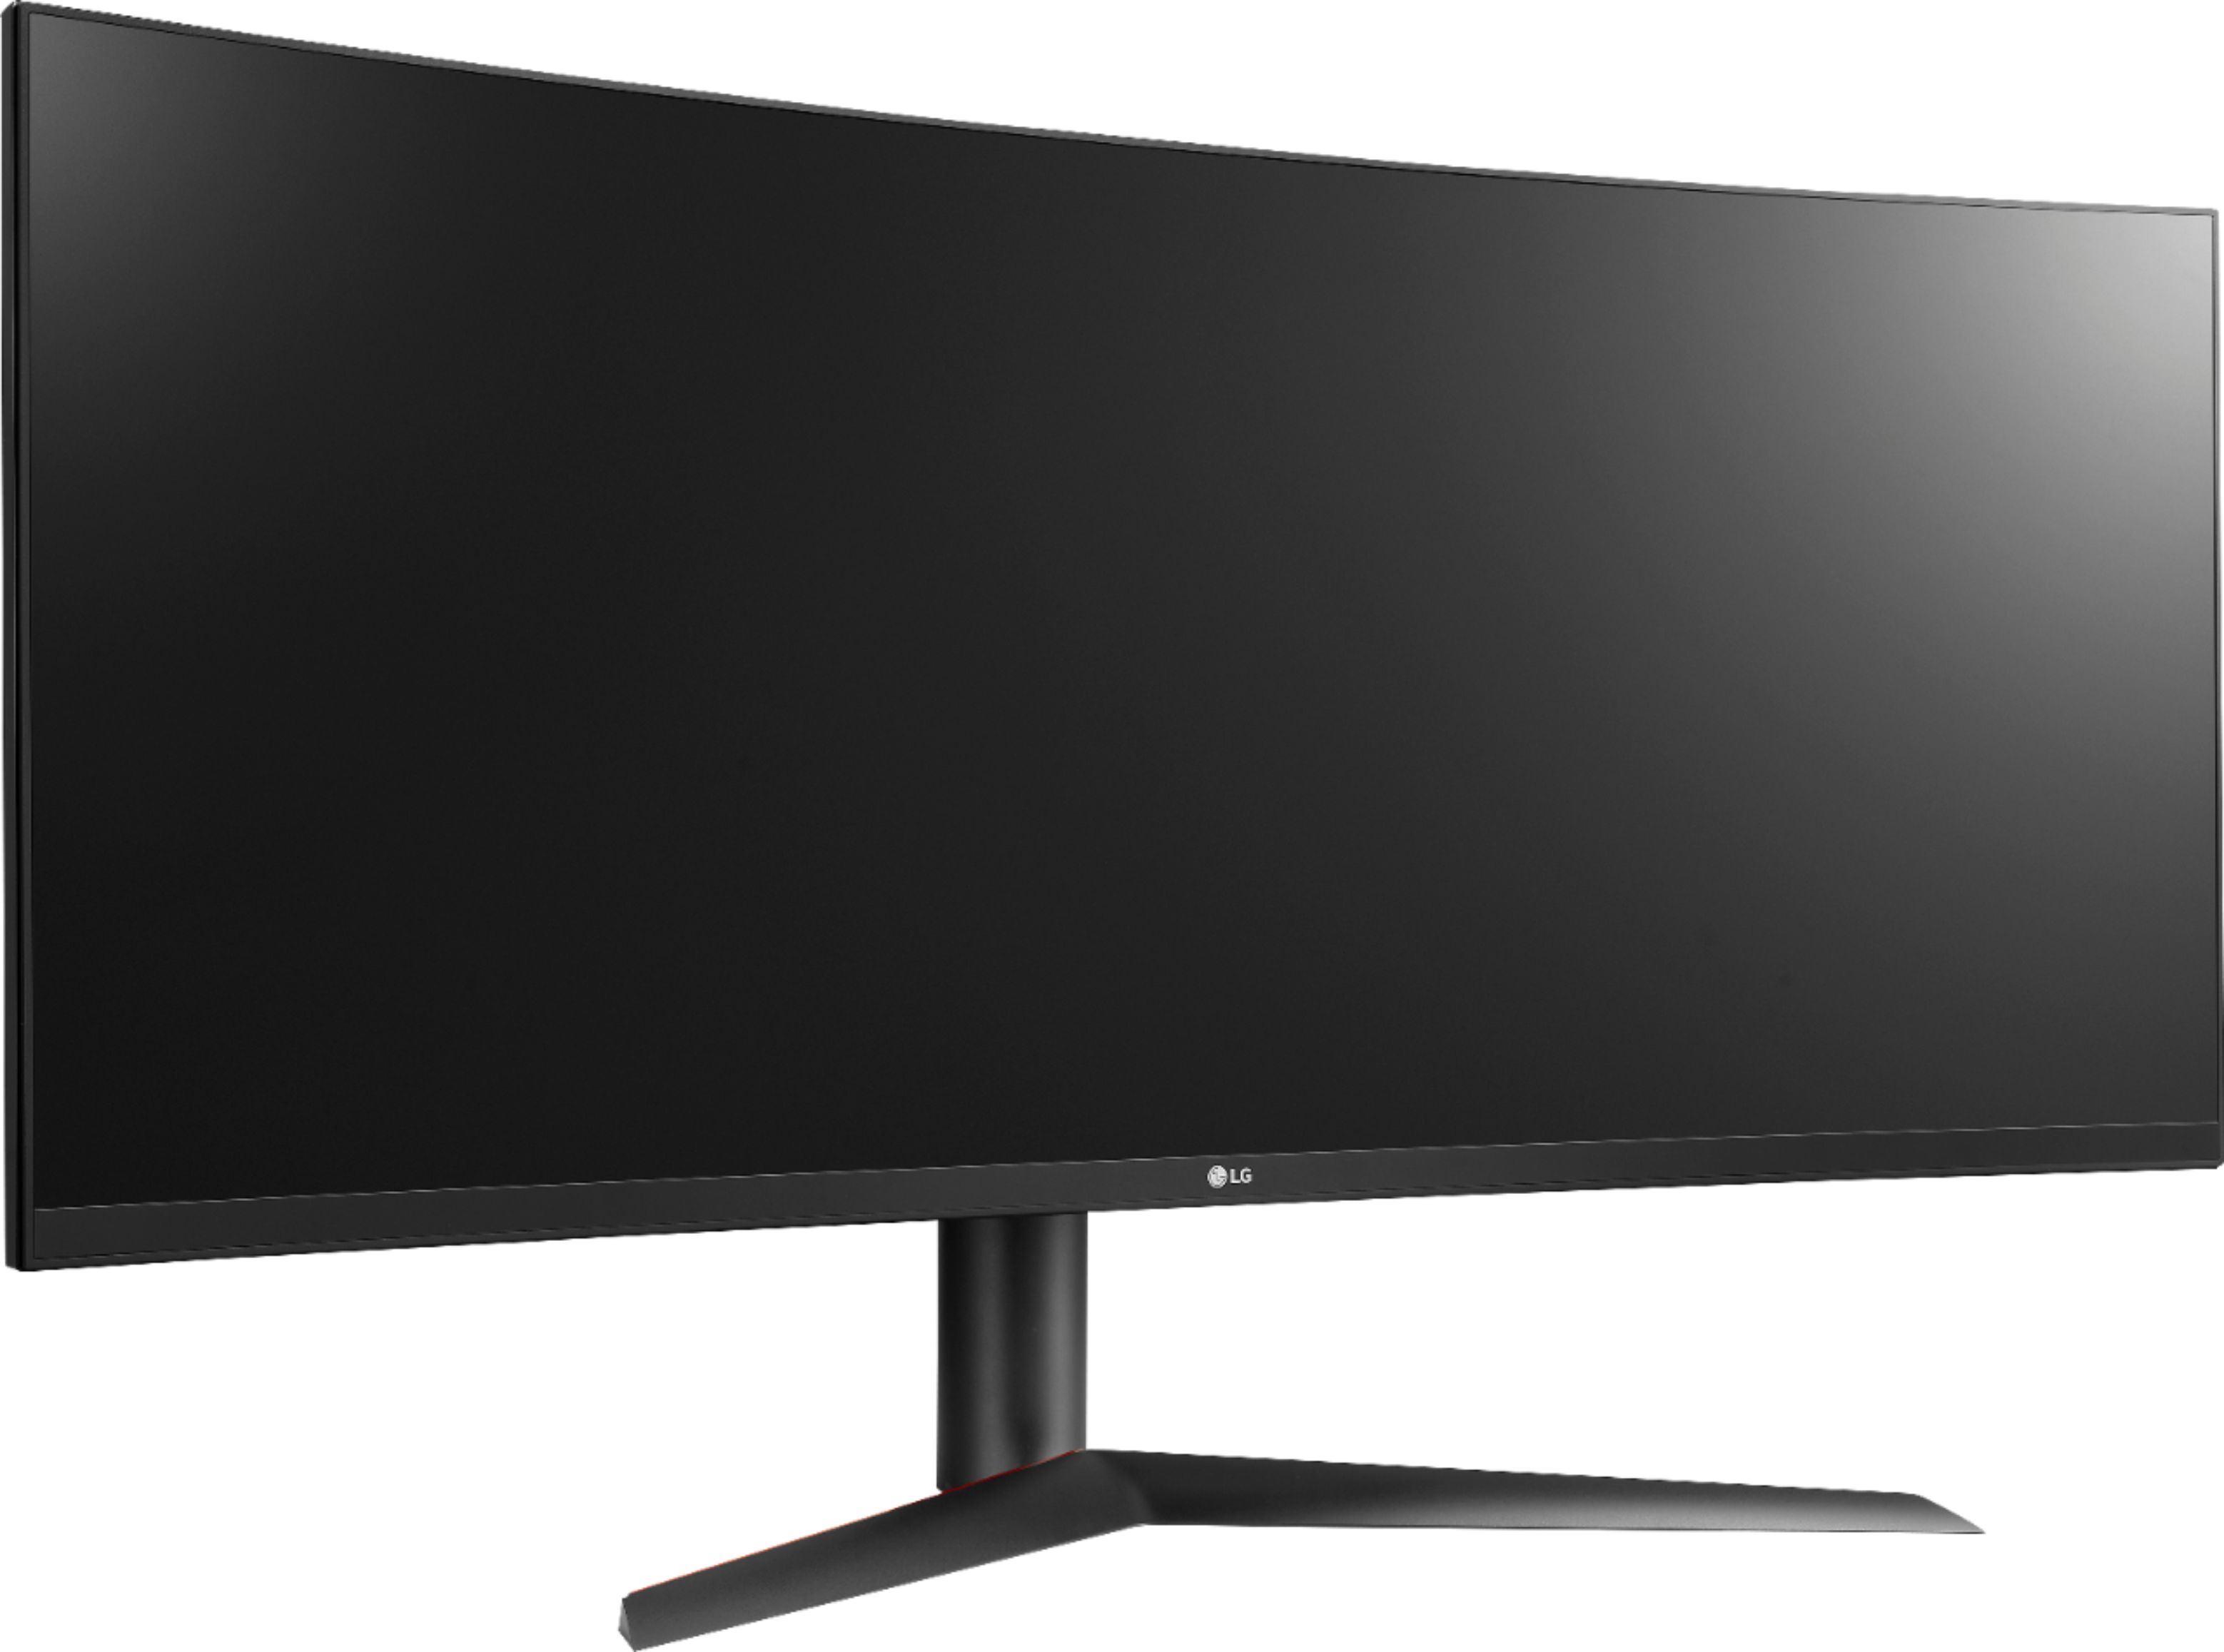 Angle View: LG - UltraGear 38" IPS LED UltraWide HD G-SYNC Monitor (HDMI) - Black